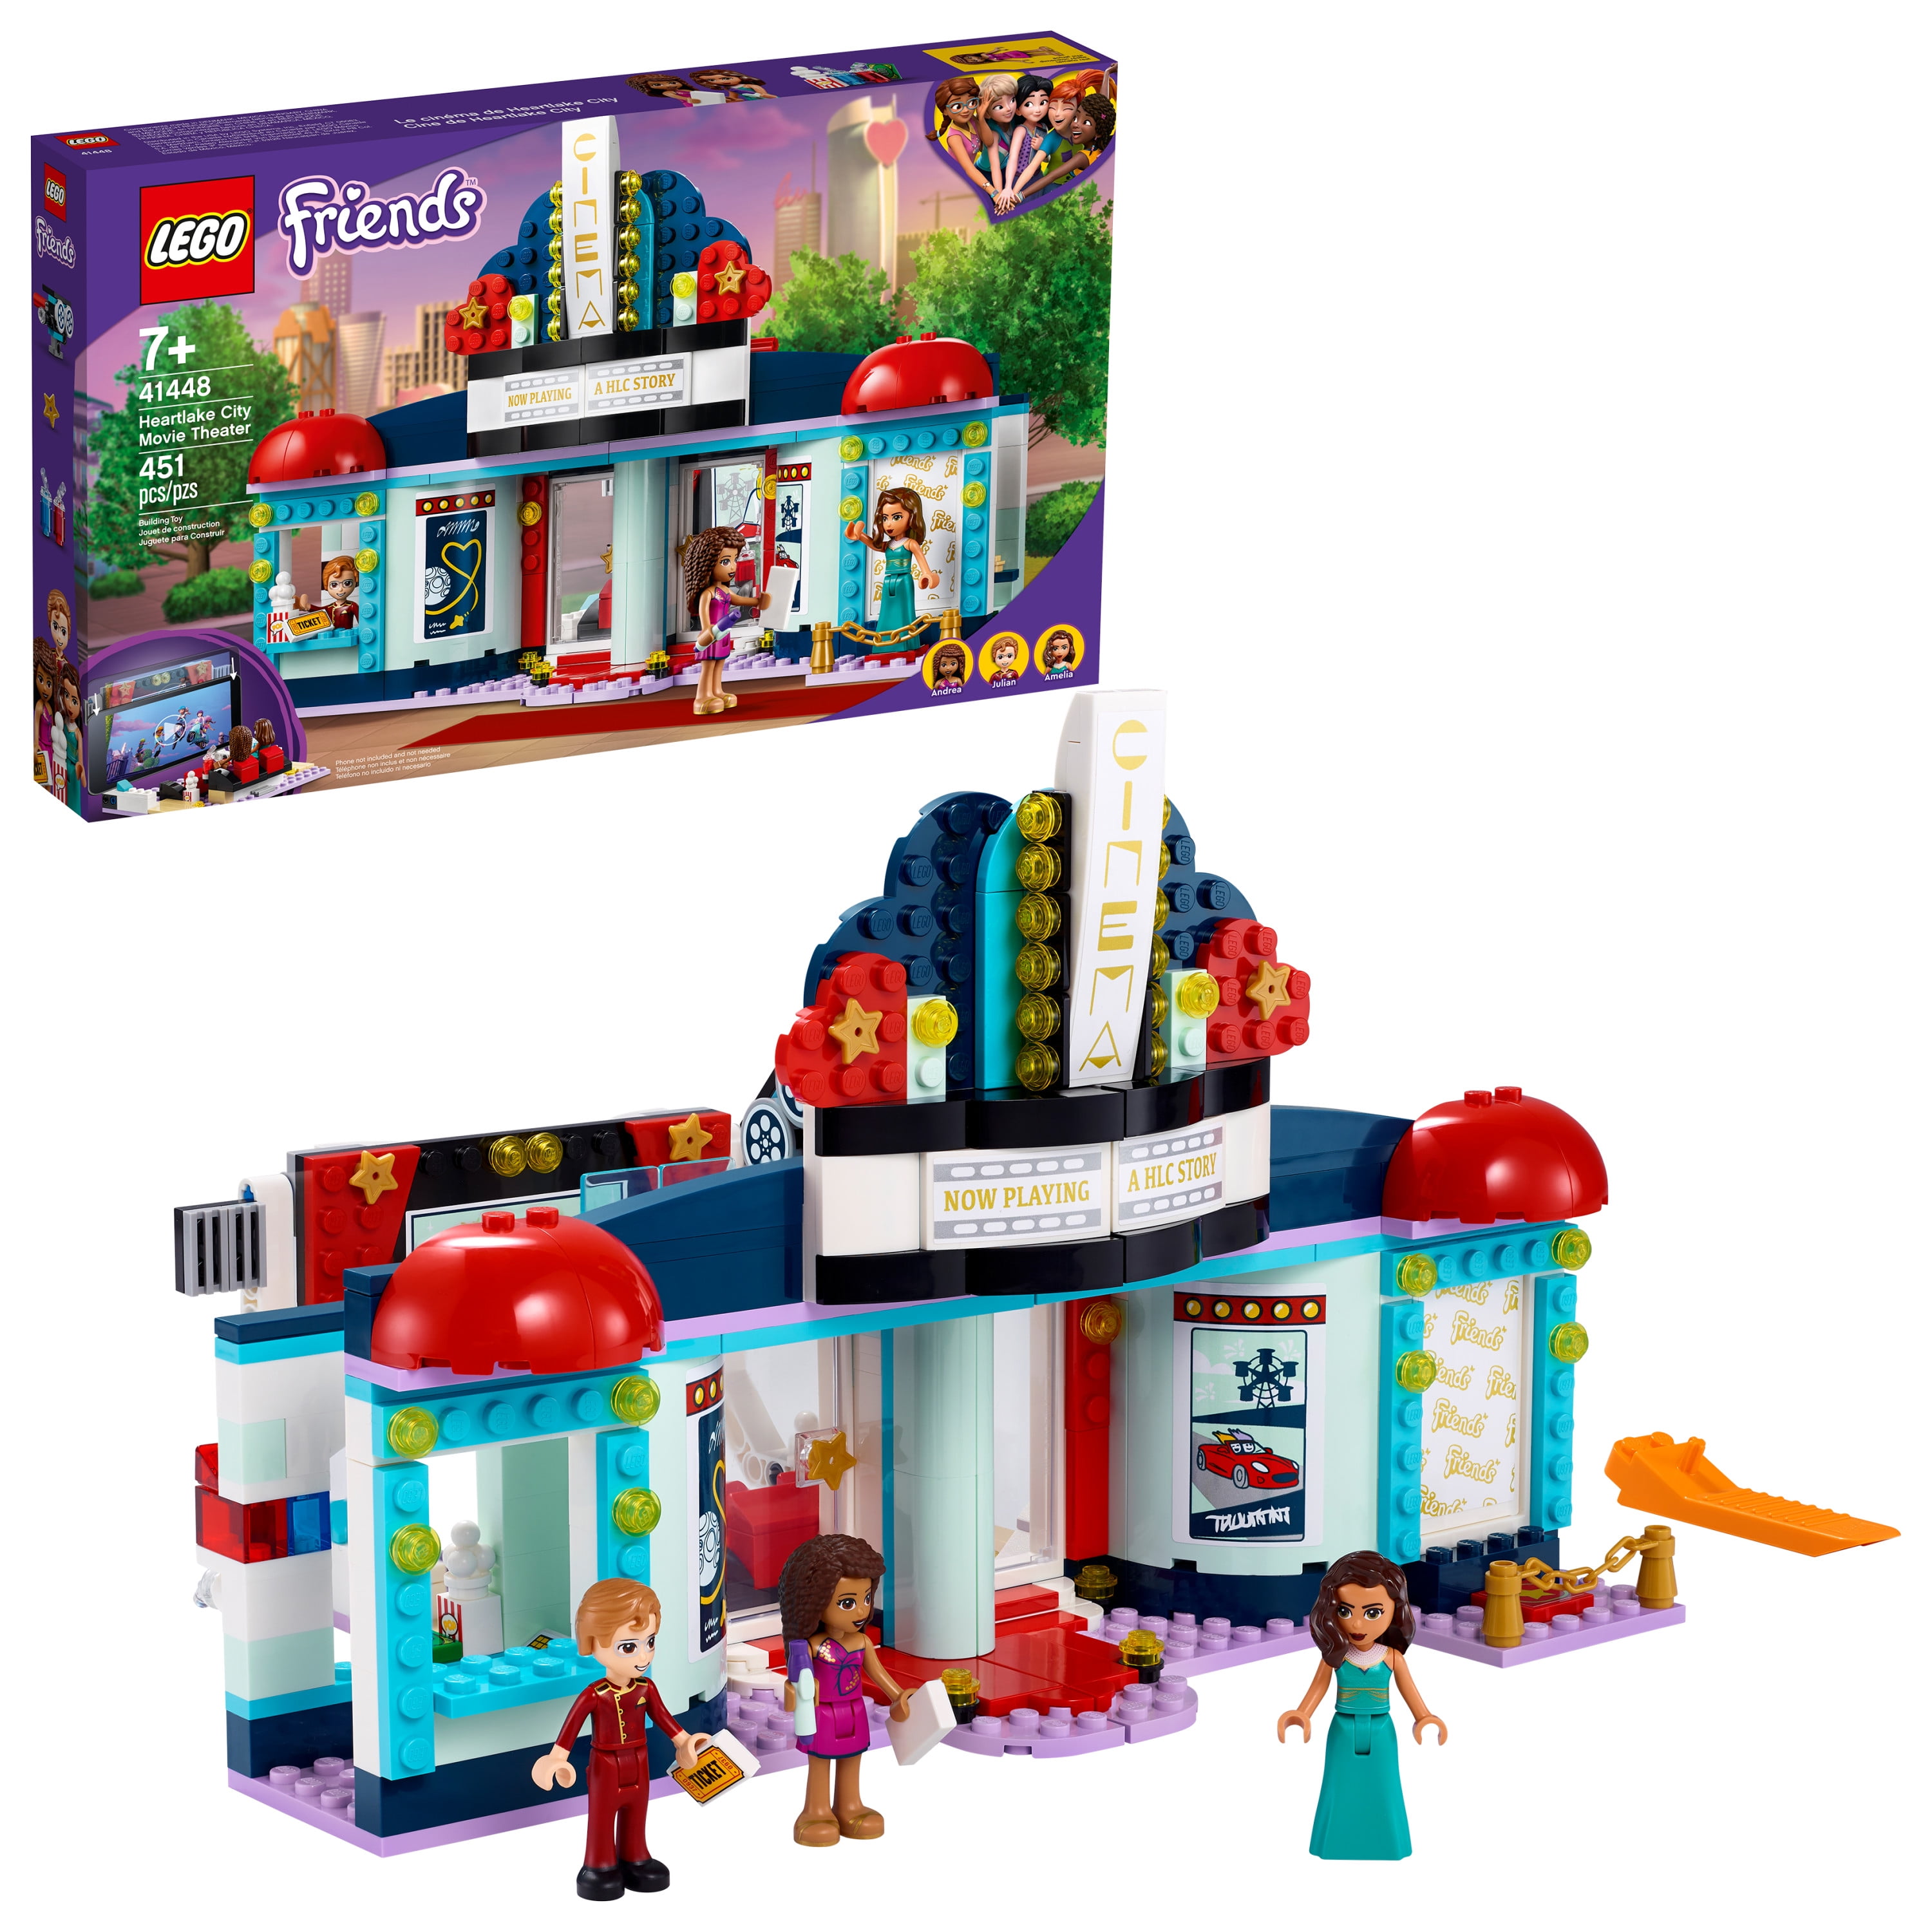 siv Bedøvelsesmiddel biologi LEGO Friends Heartlake City Movie Theater Set 41448 Building Toy; Great  Gift for Kids (451 Pieces) - Walmart.com